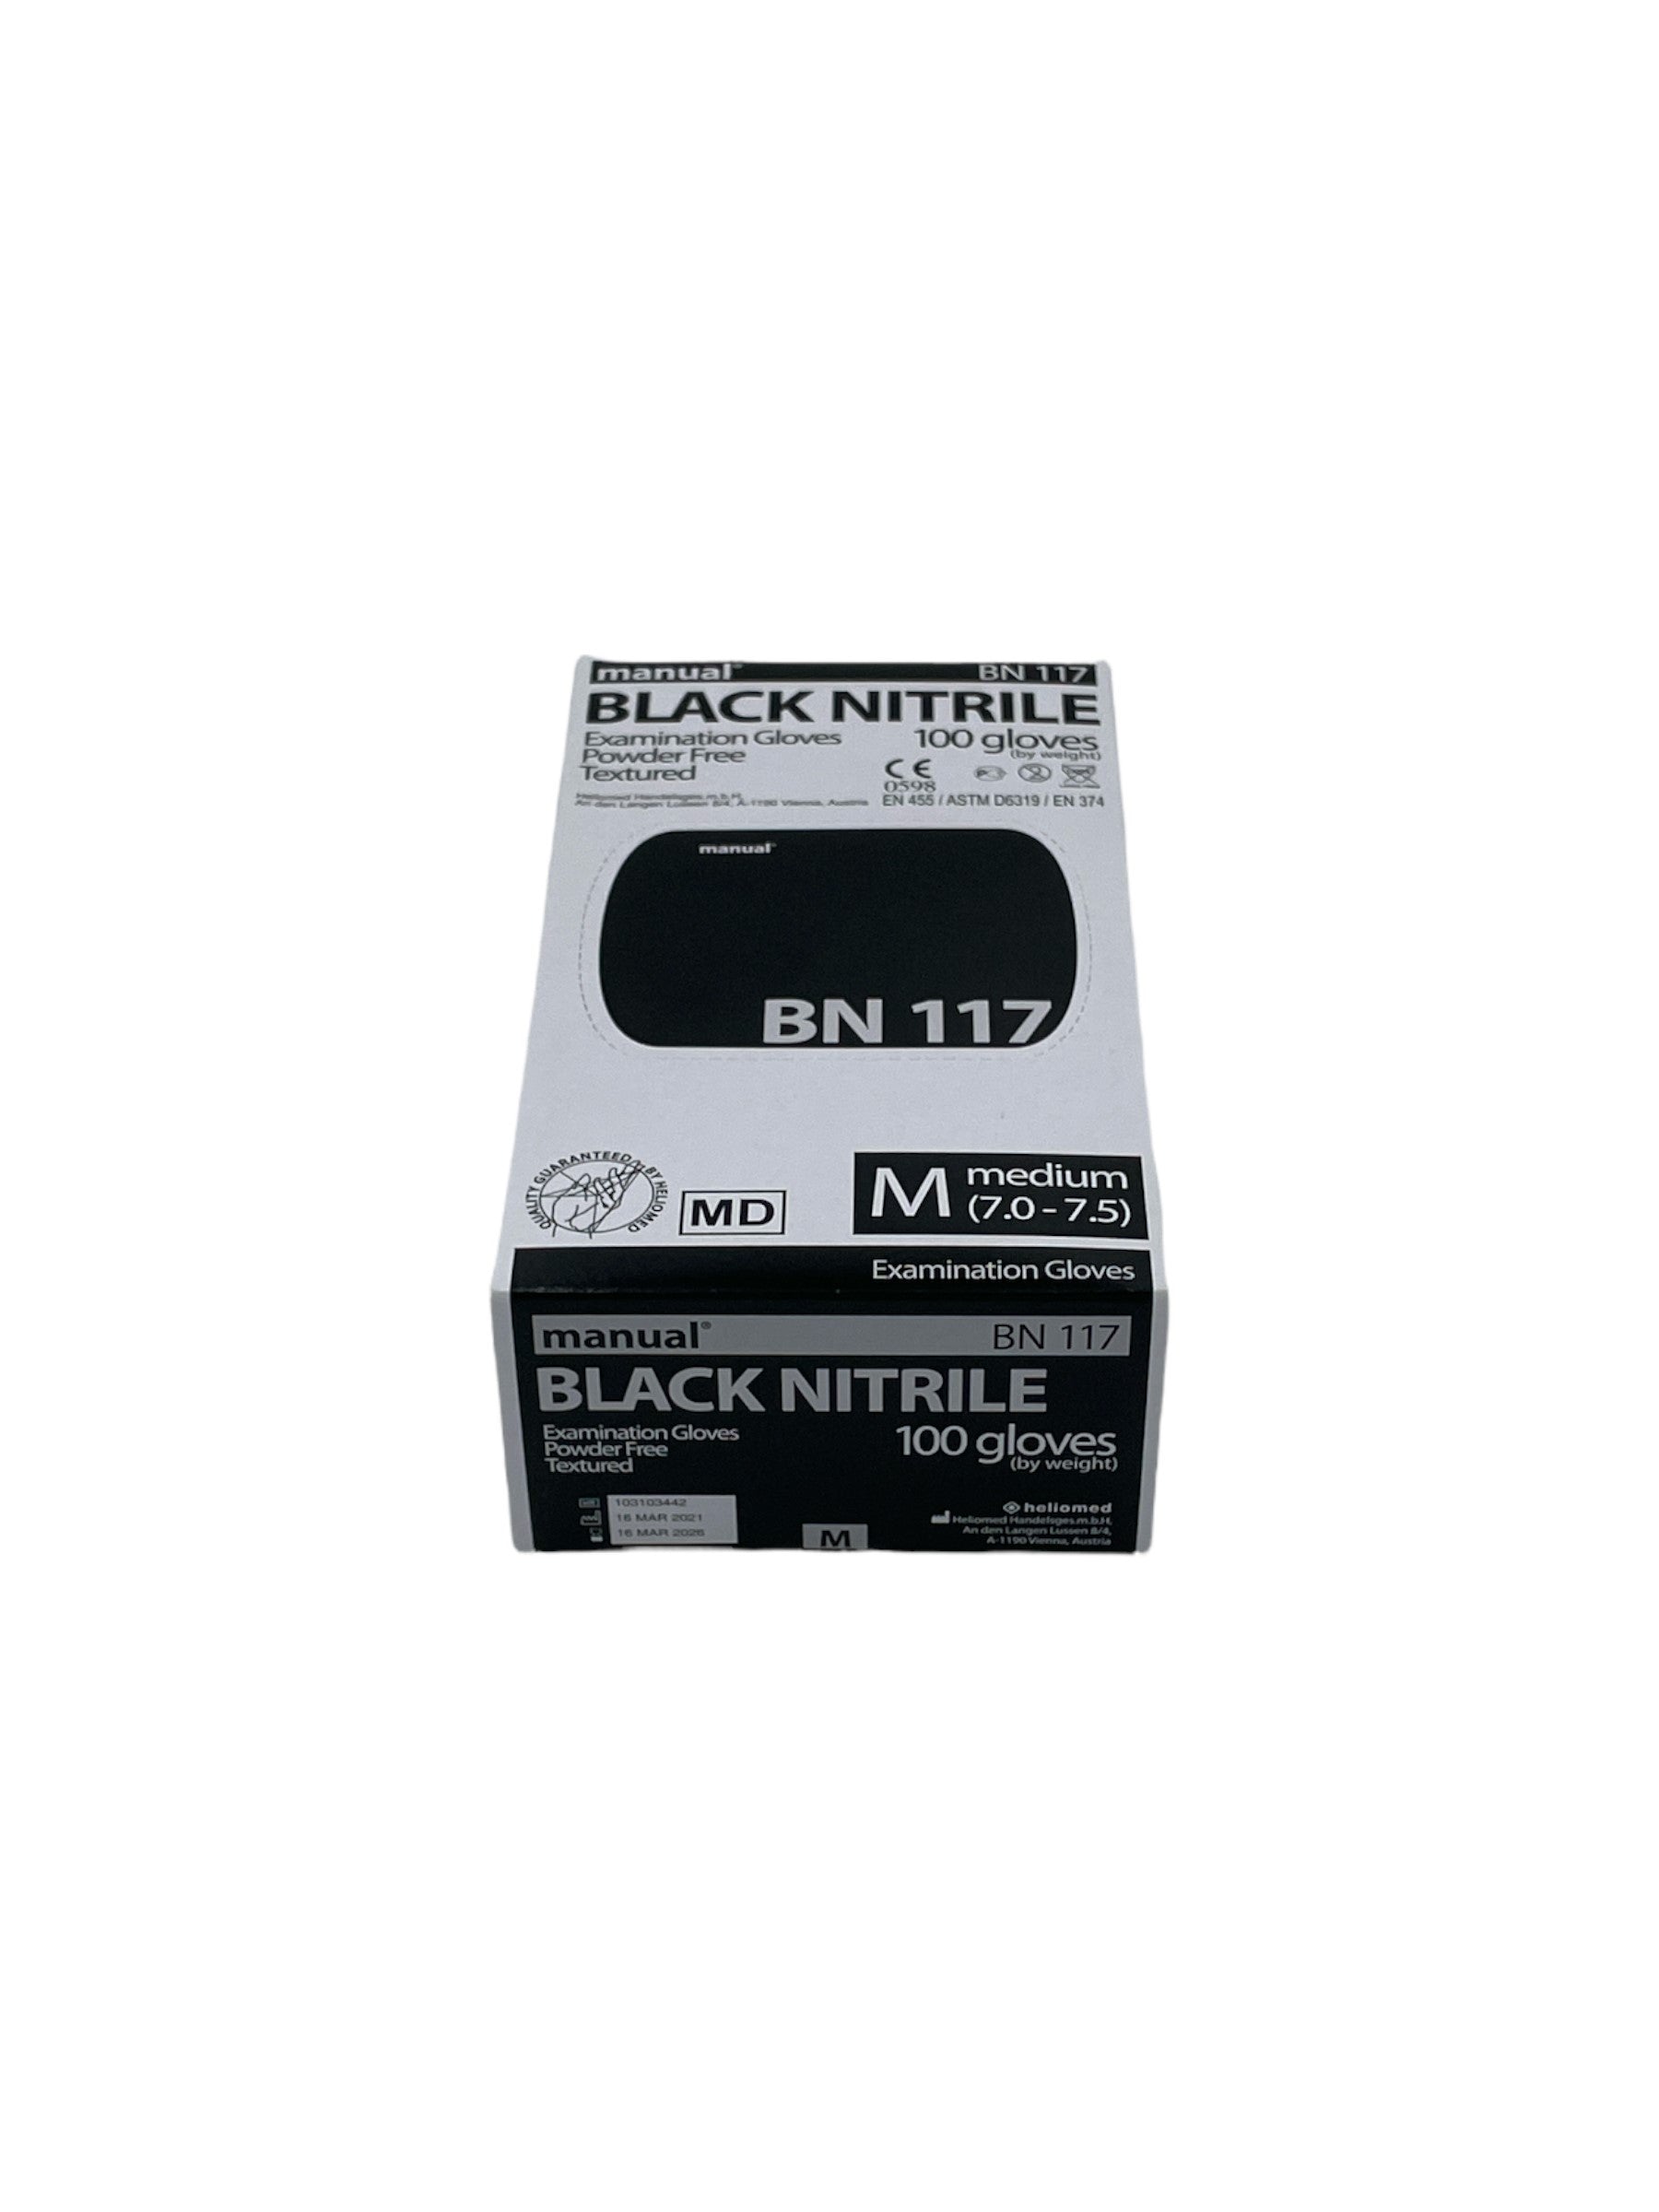 Manual Black Nitril Untersuchungshandschuhe BN117 - Medical Deal